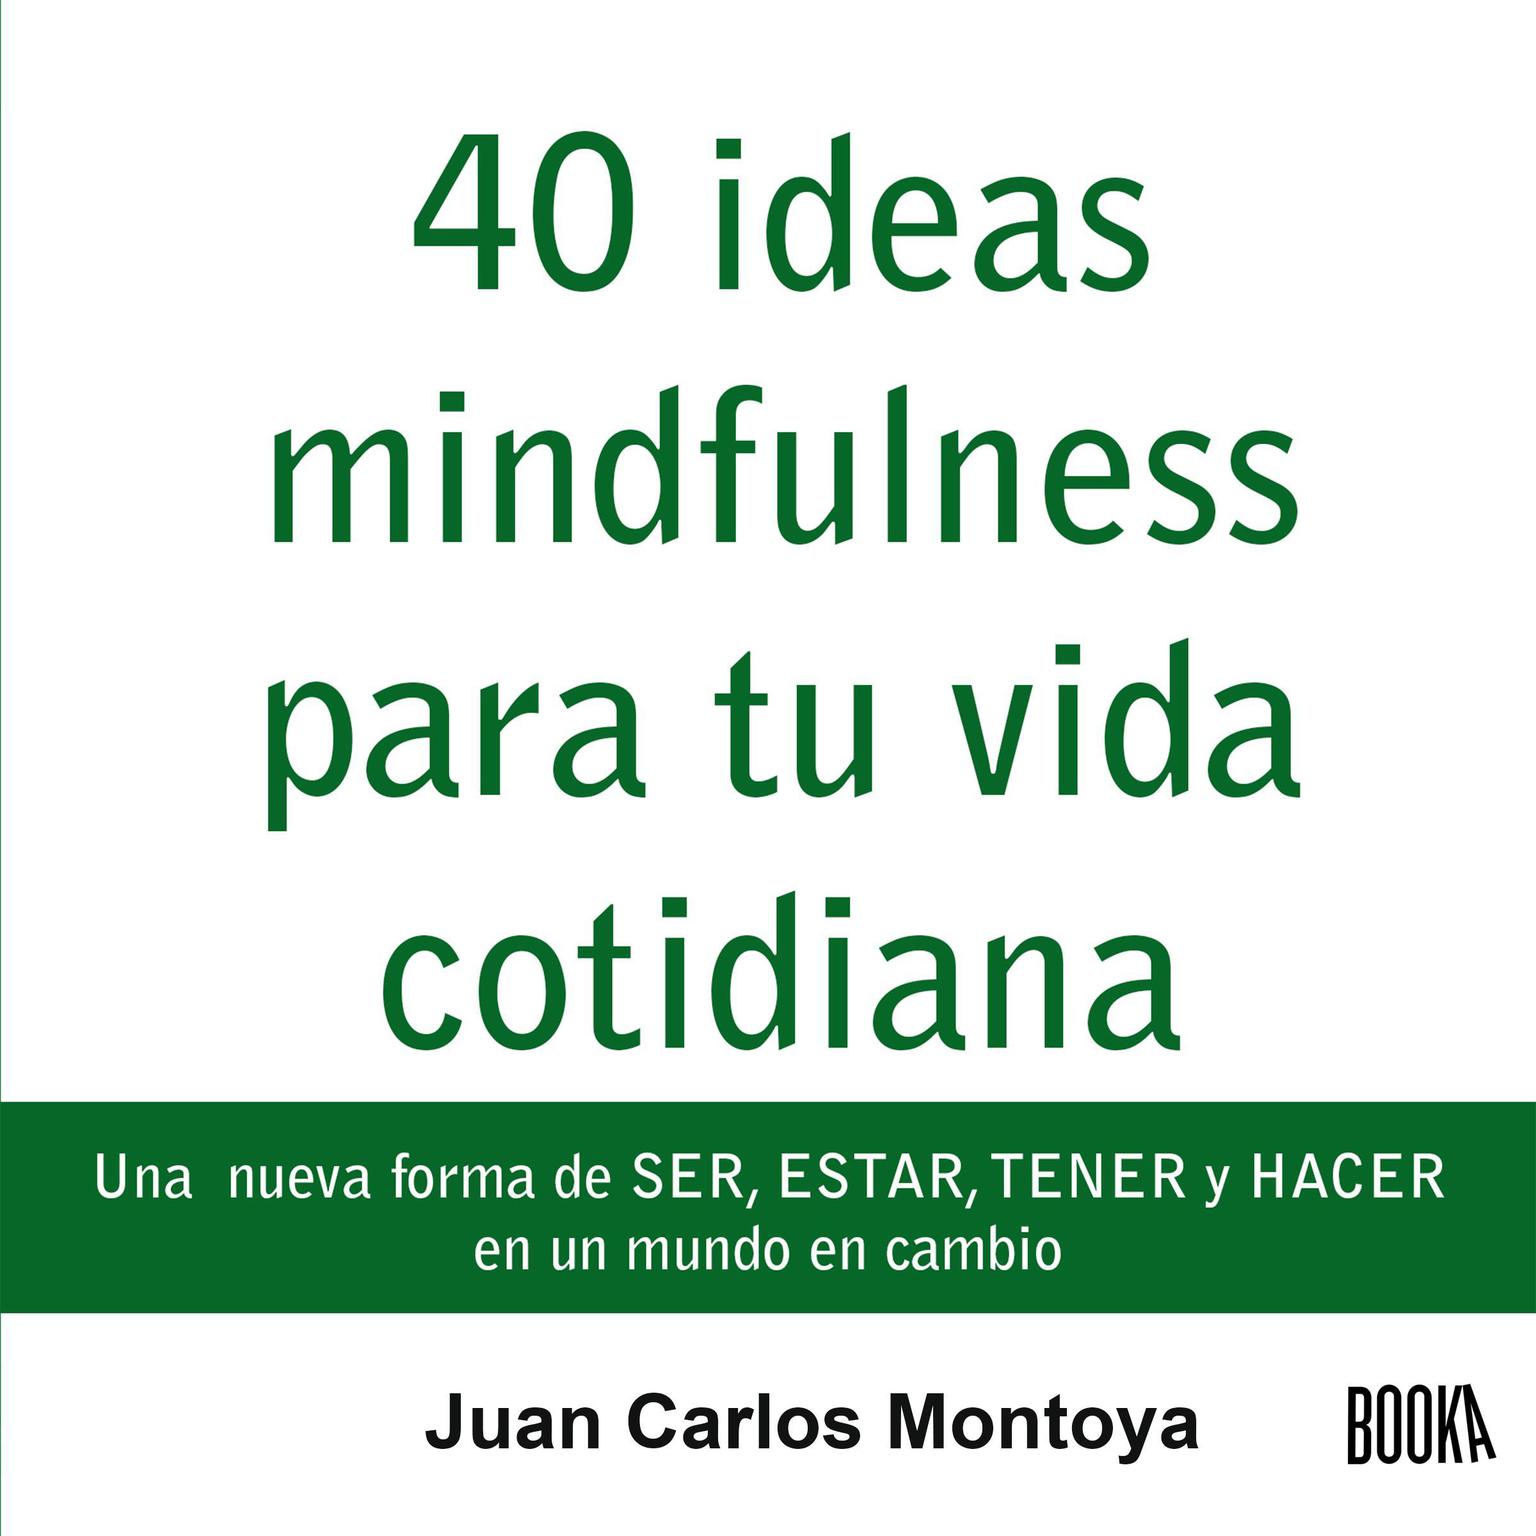 40 ideas mindfulness para tu vida cotidiana Audiobook, by Juan Carlos Montoya